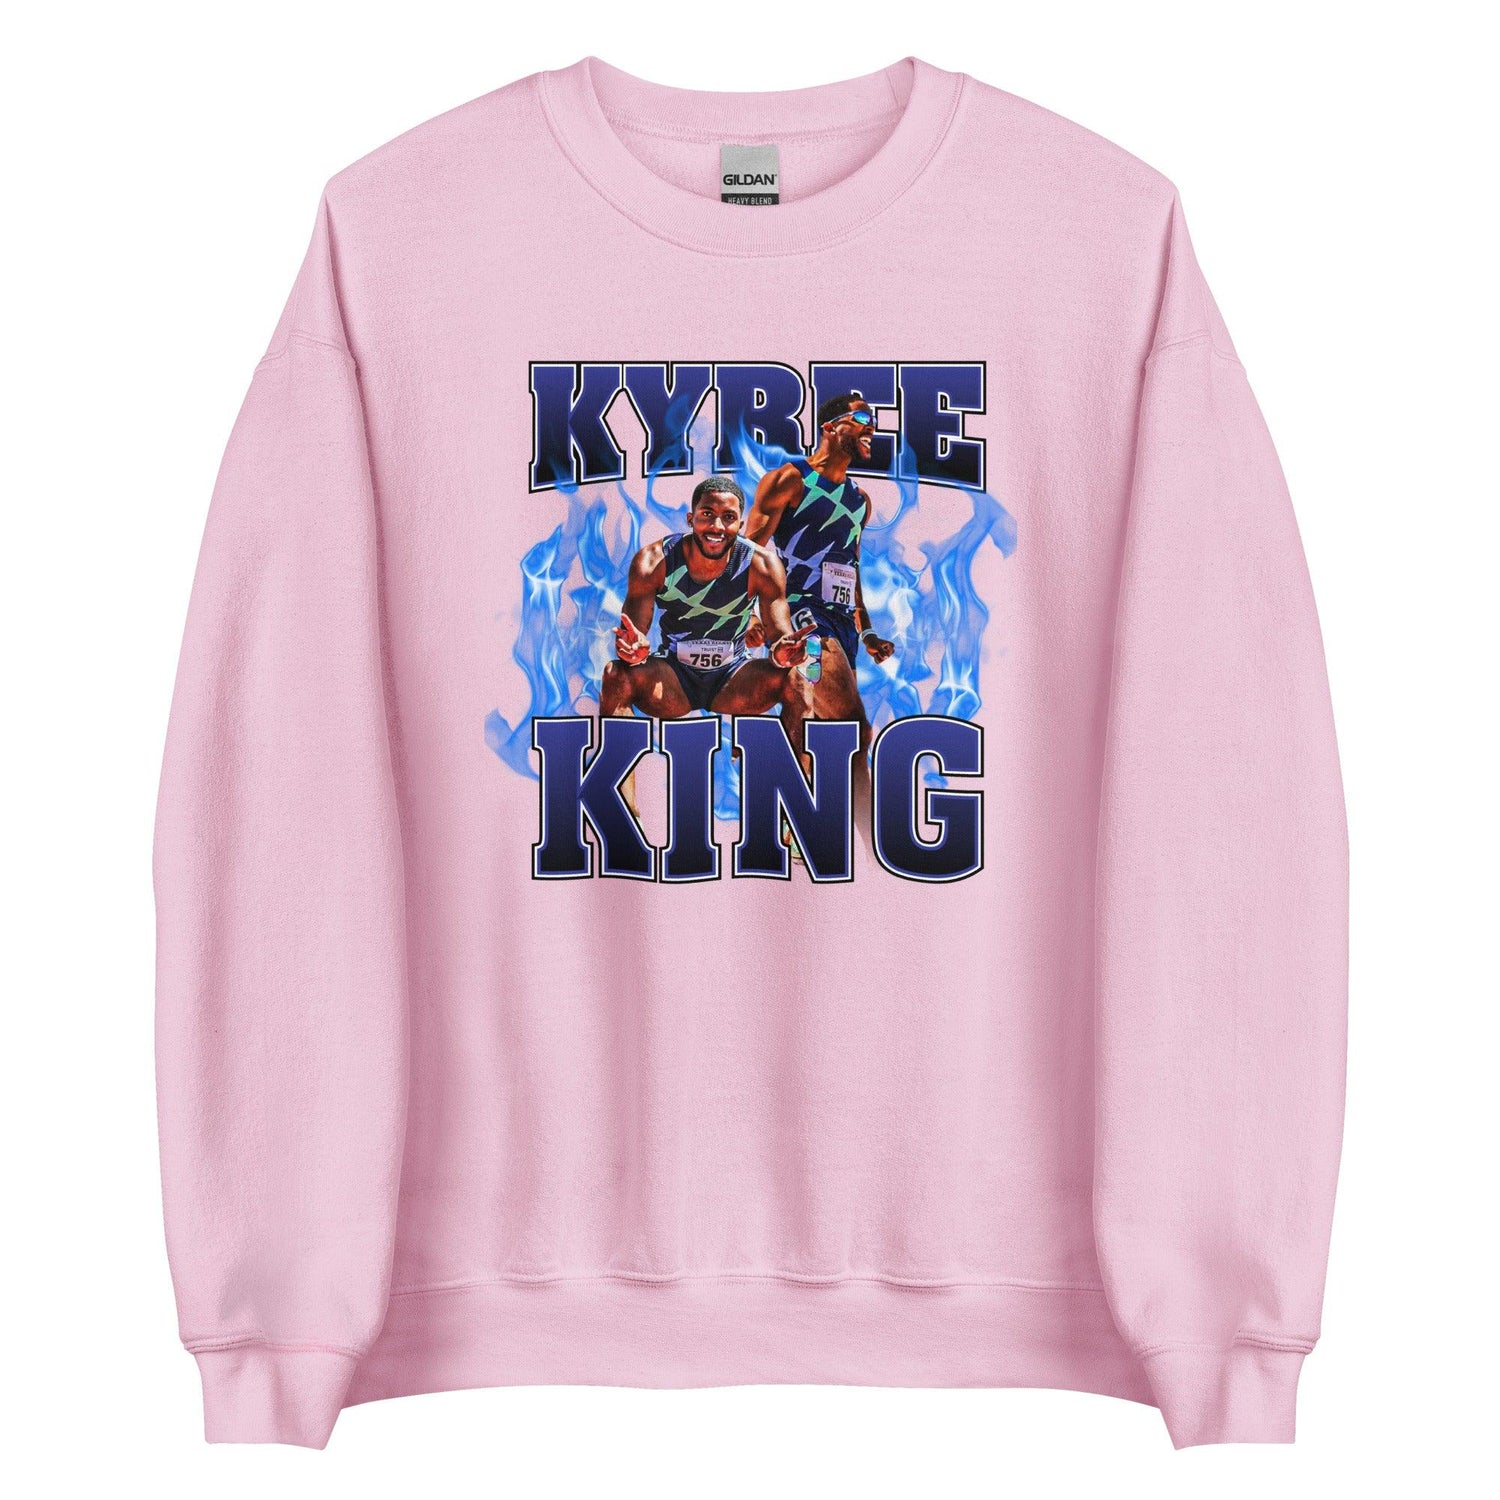 Kyree King “Essential” Sweatshirt - Fan Arch